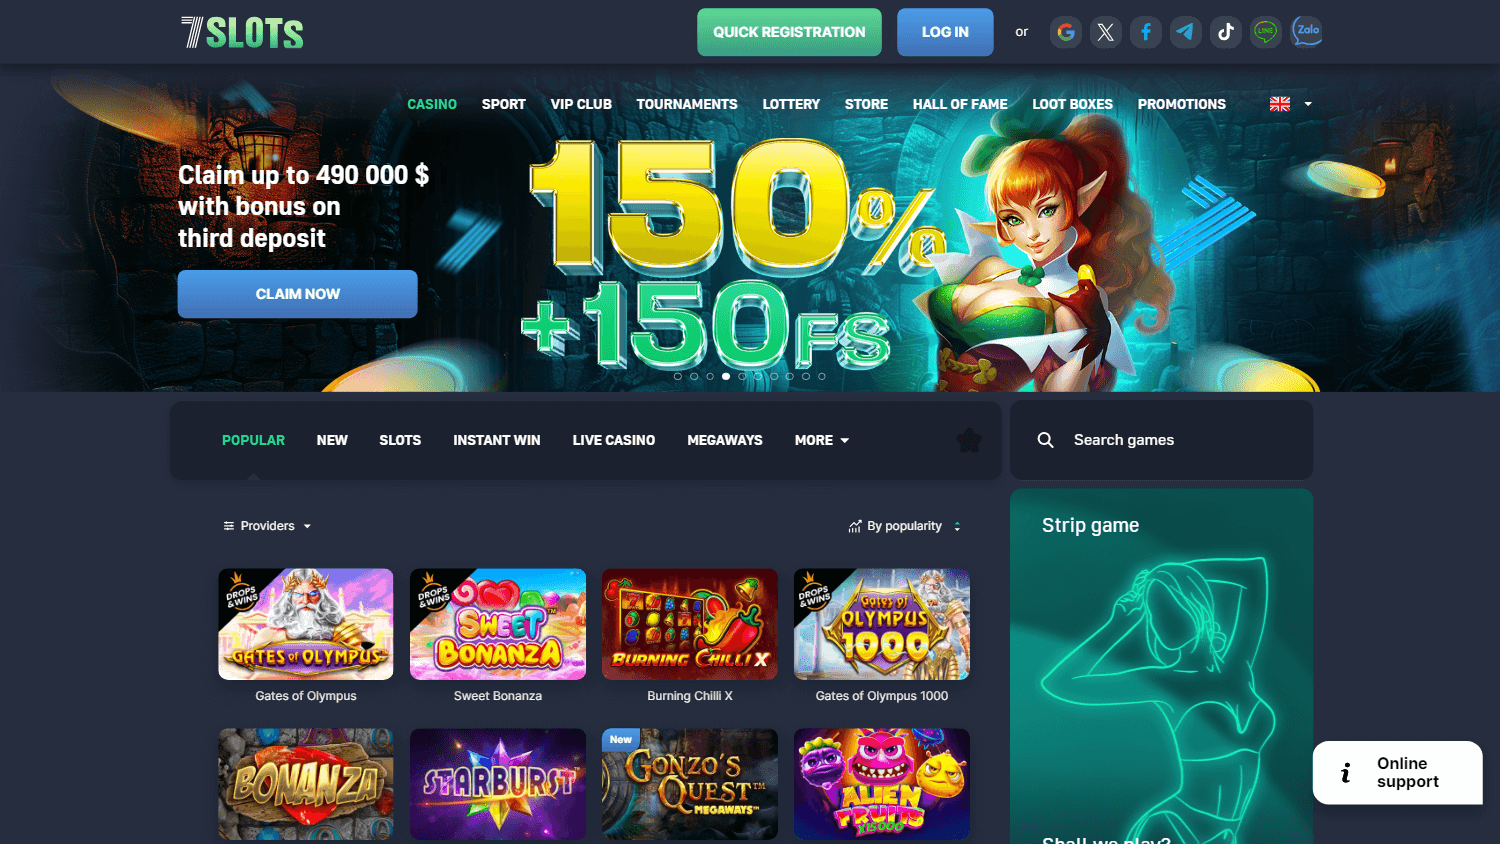 7slots_casino_game_gallery_desktop